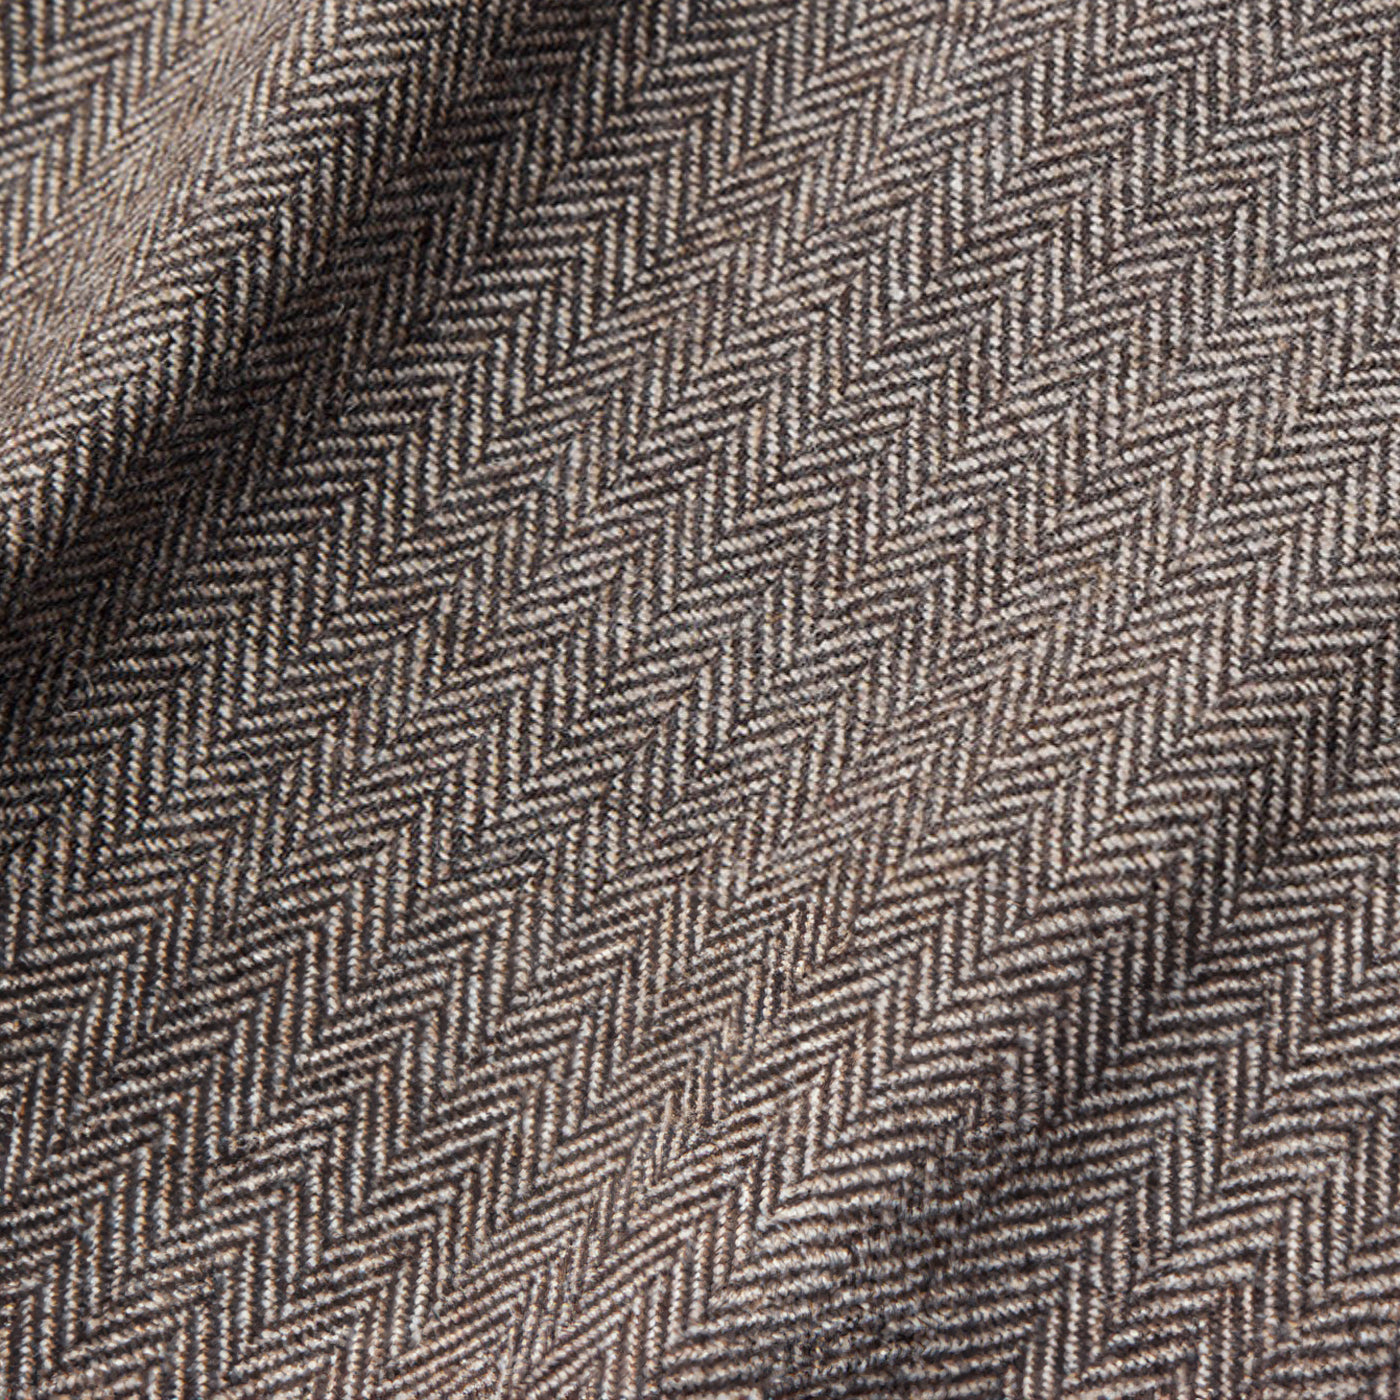 3 Pieces Retro Peaky Lapel Herringbone Tweed Suit